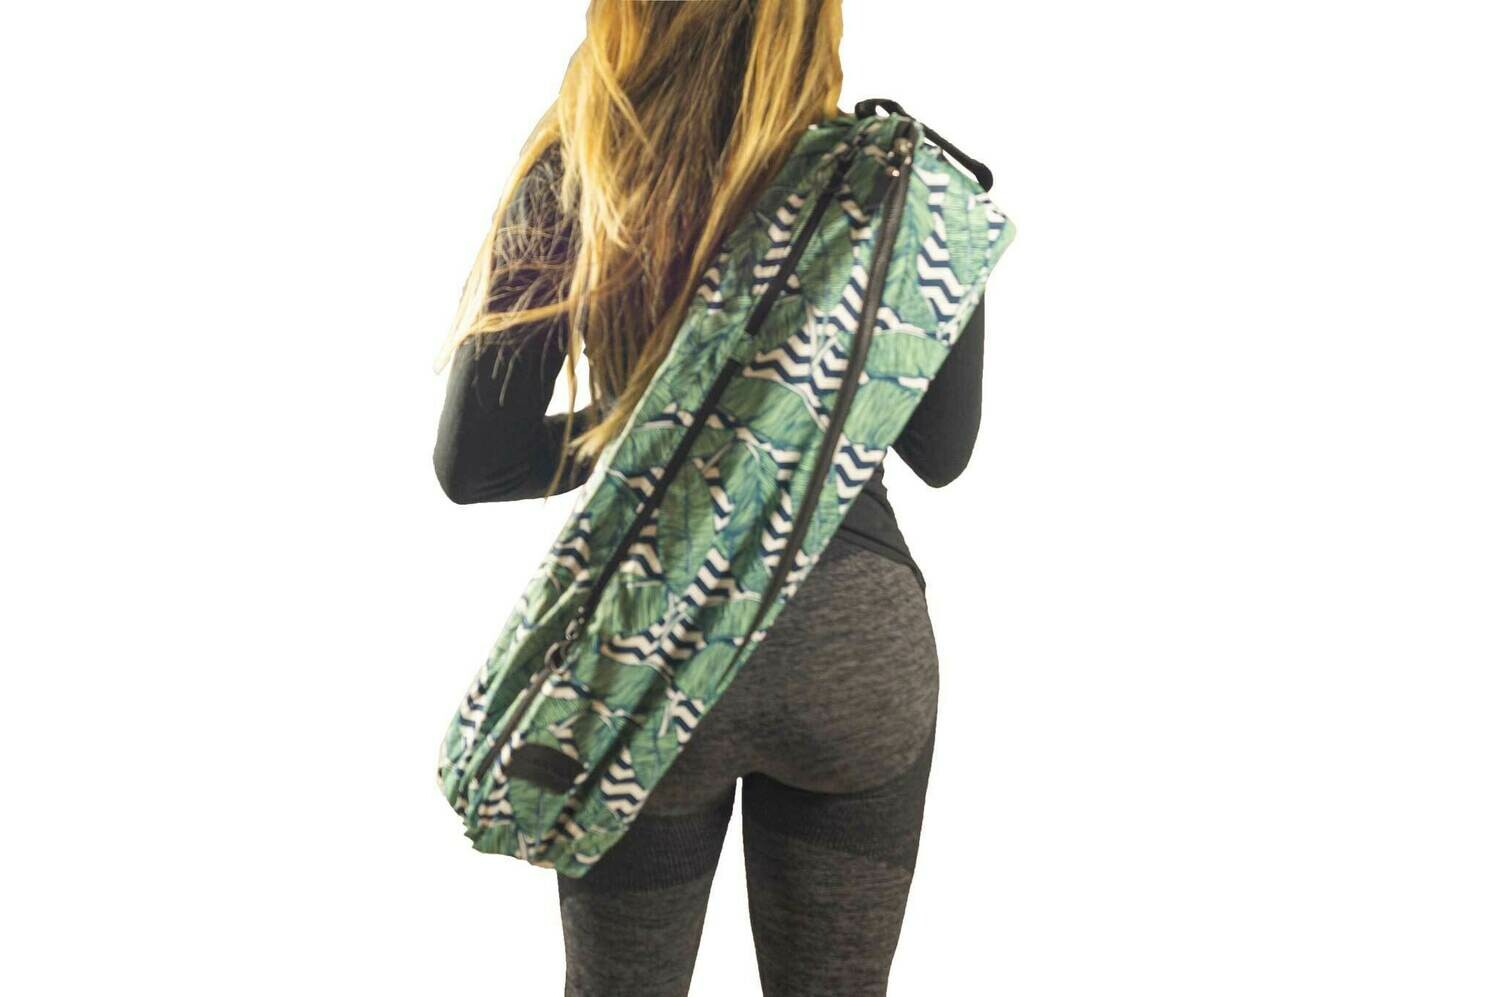 Yoga mat sling bag